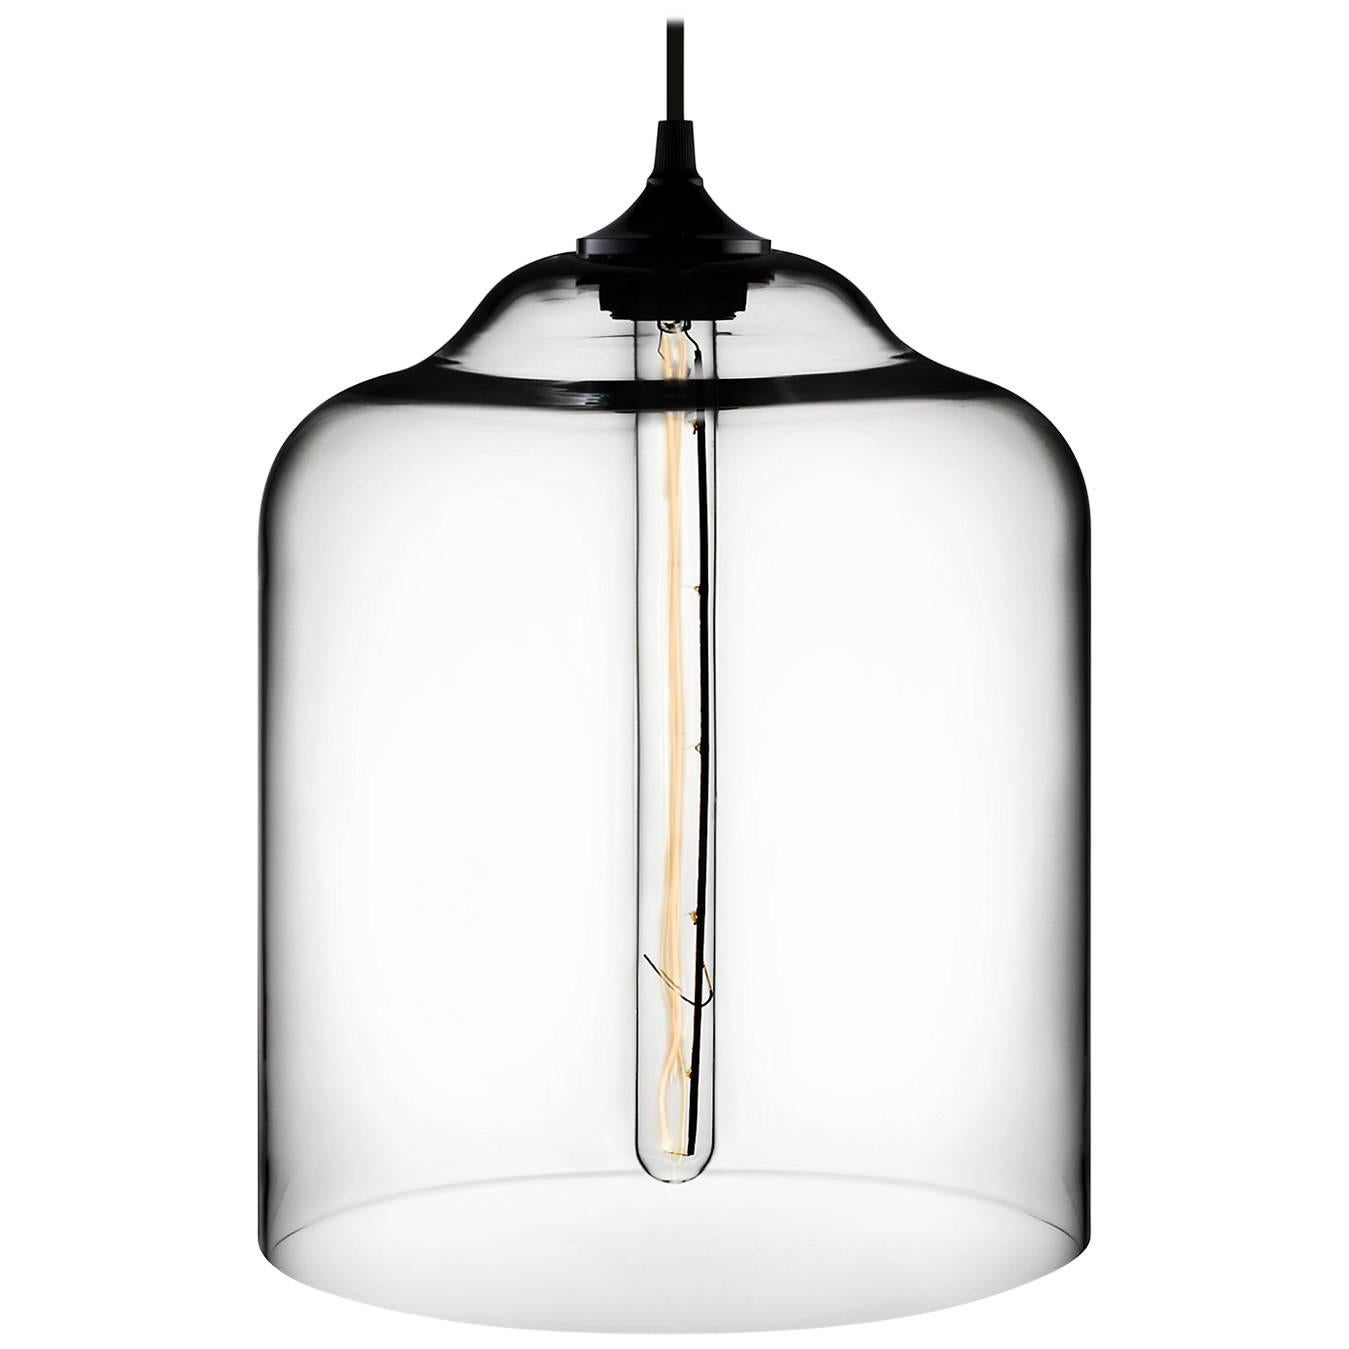 Bell Jar Crystal Handblown Modern Glass Pendant Light, Made in the USA